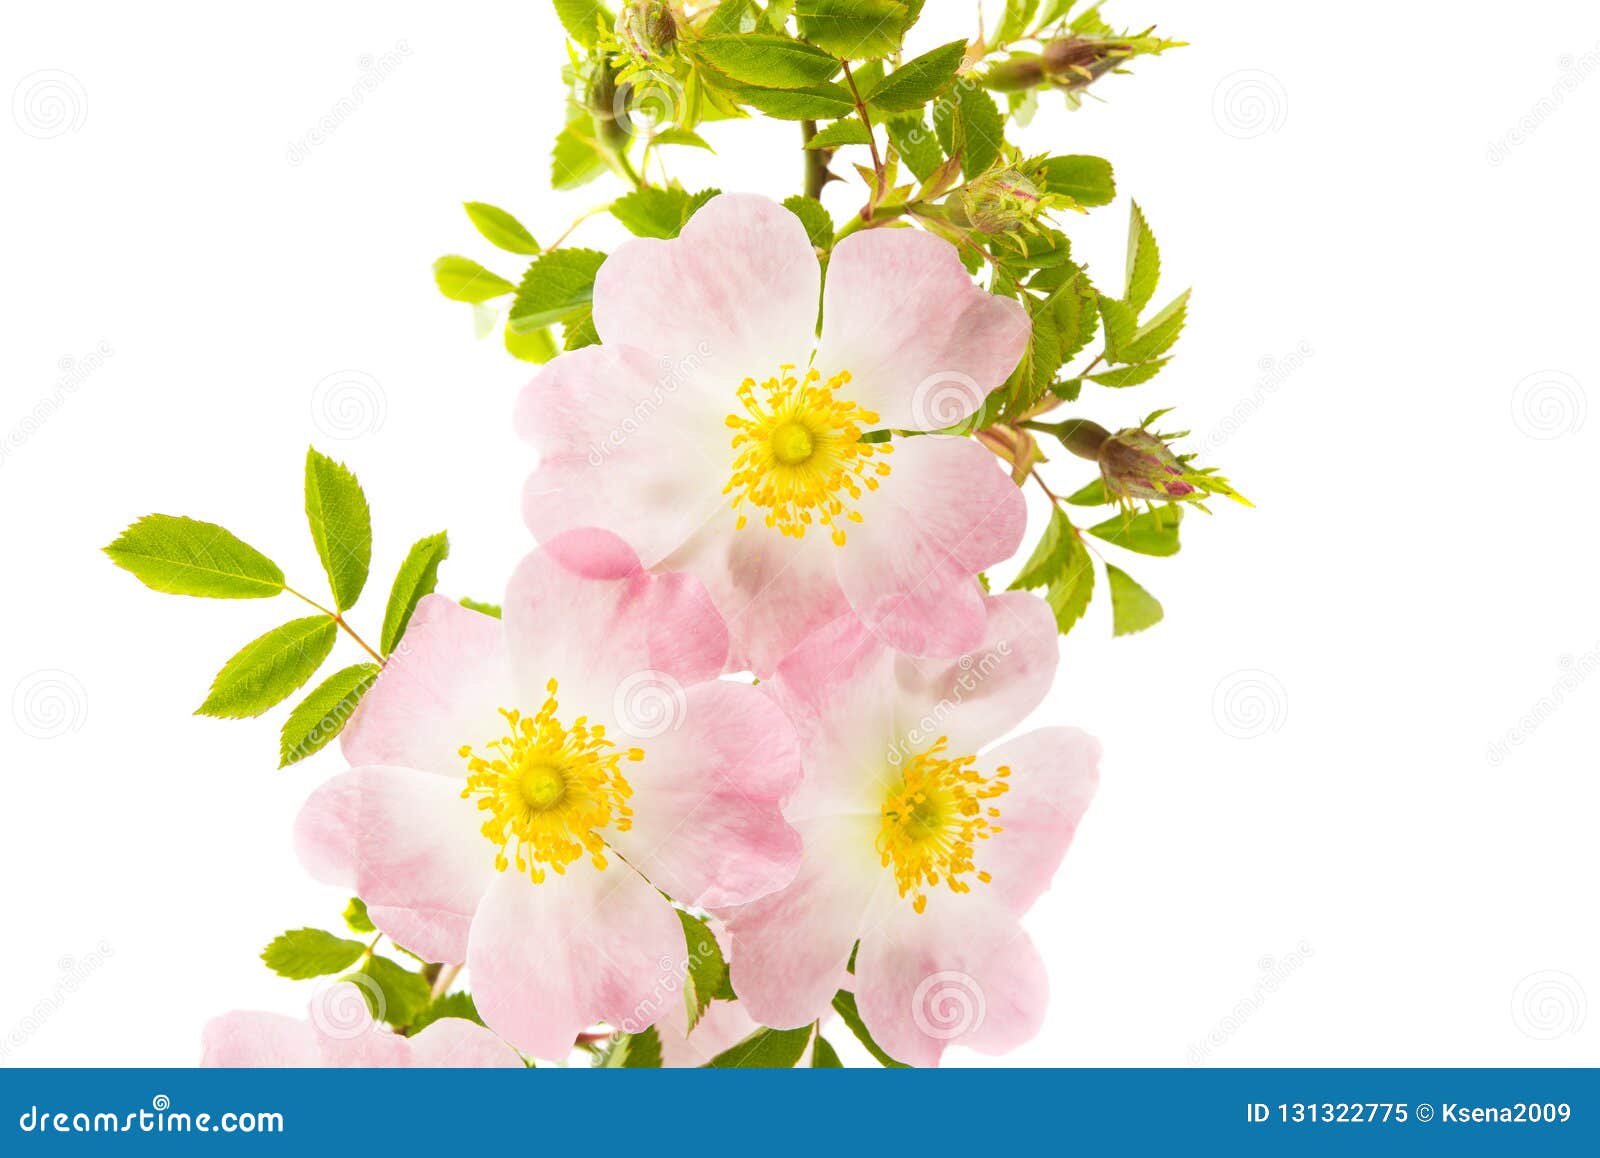 Wild rose flower isolated stock image. Image of roses - 131322775